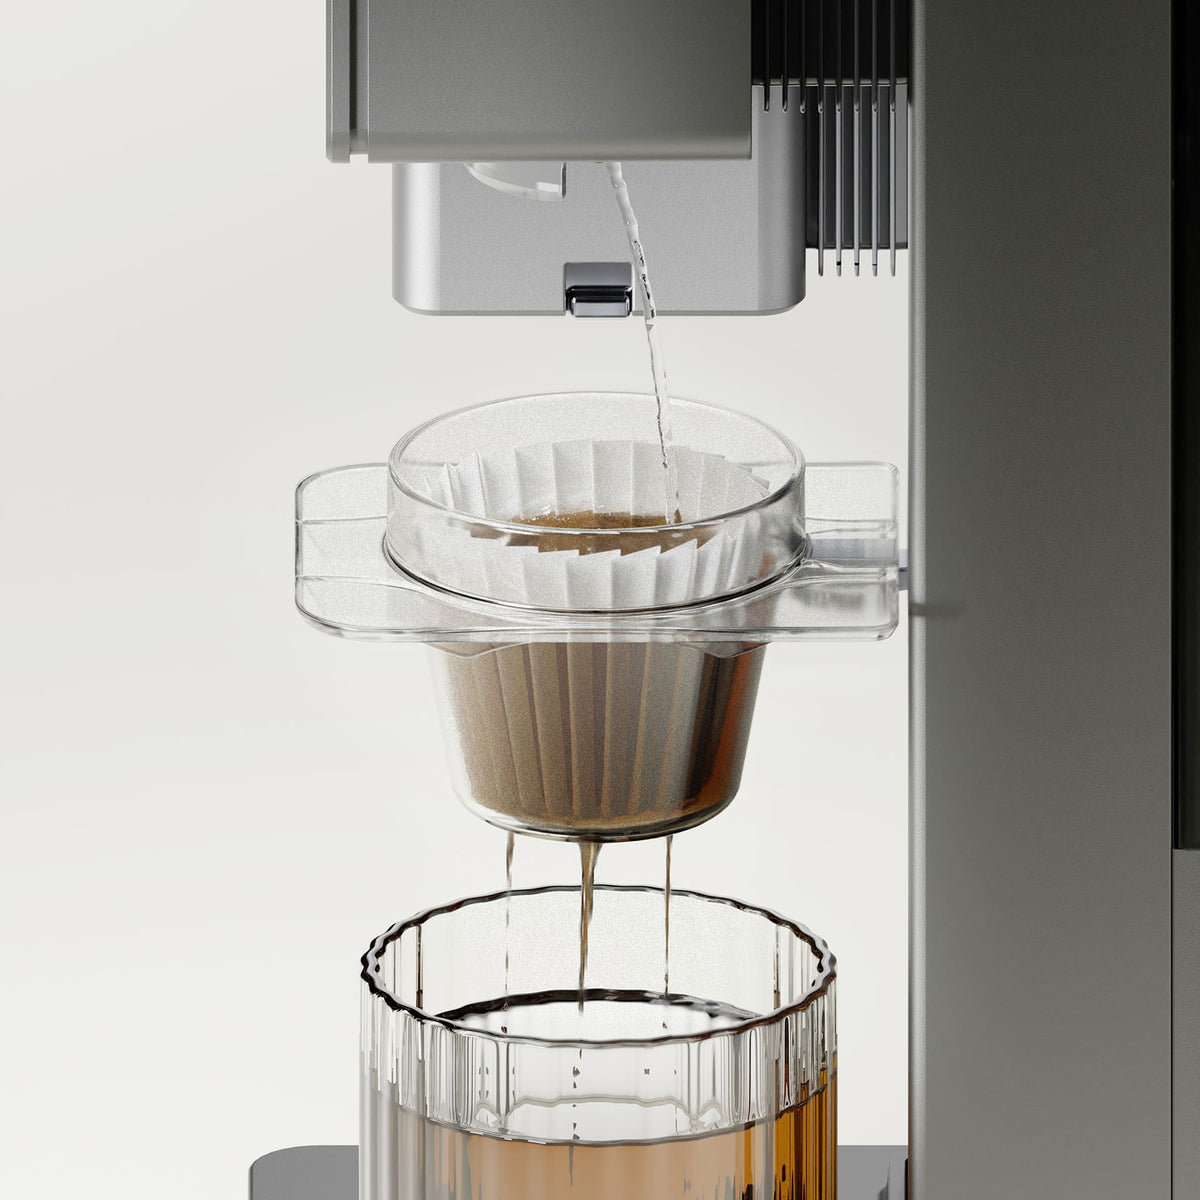 xBloom Coffee Machine